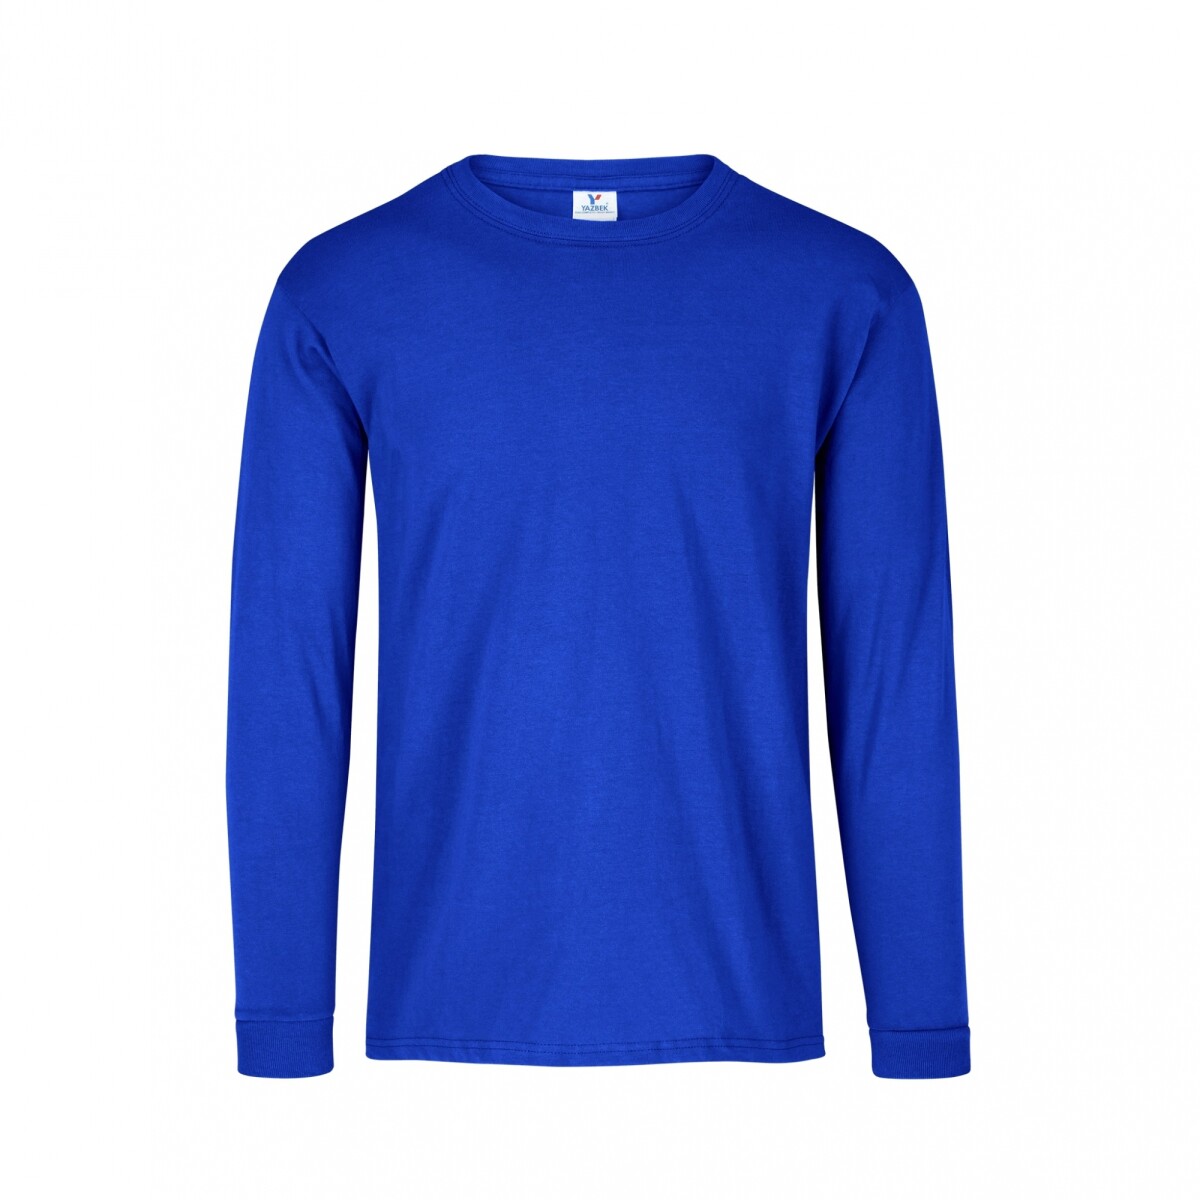 Camiseta a la base manga larga - Azul royal 